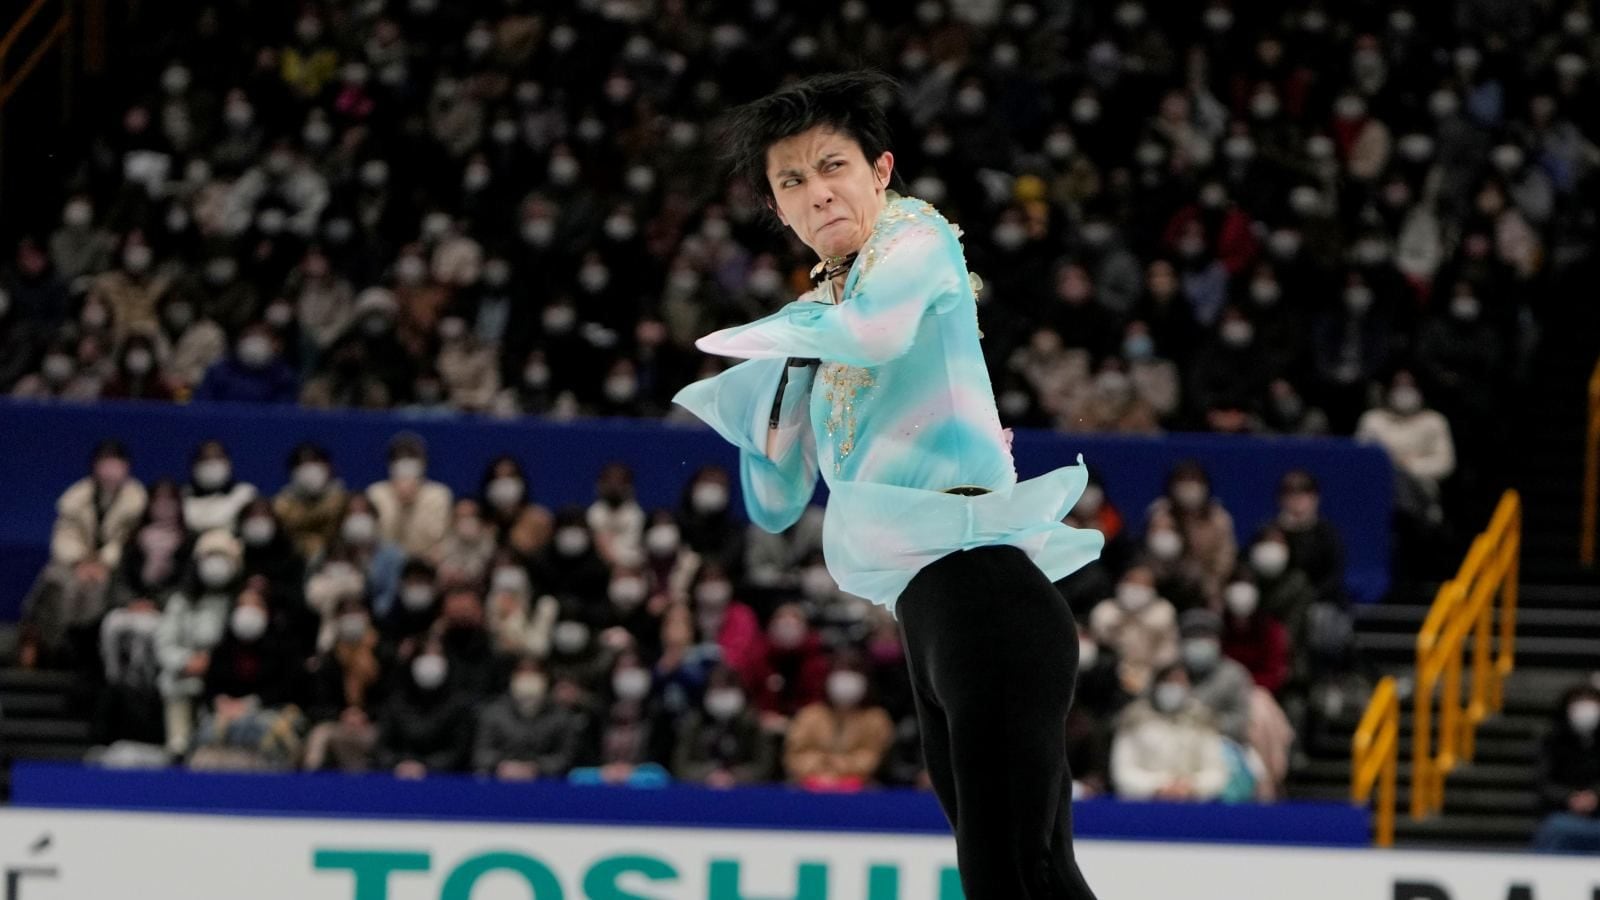 Two-time Olympic Figure Skating Champ Yuzuru Hanyu Books Beijing 2022 Spot With Japan National Victory